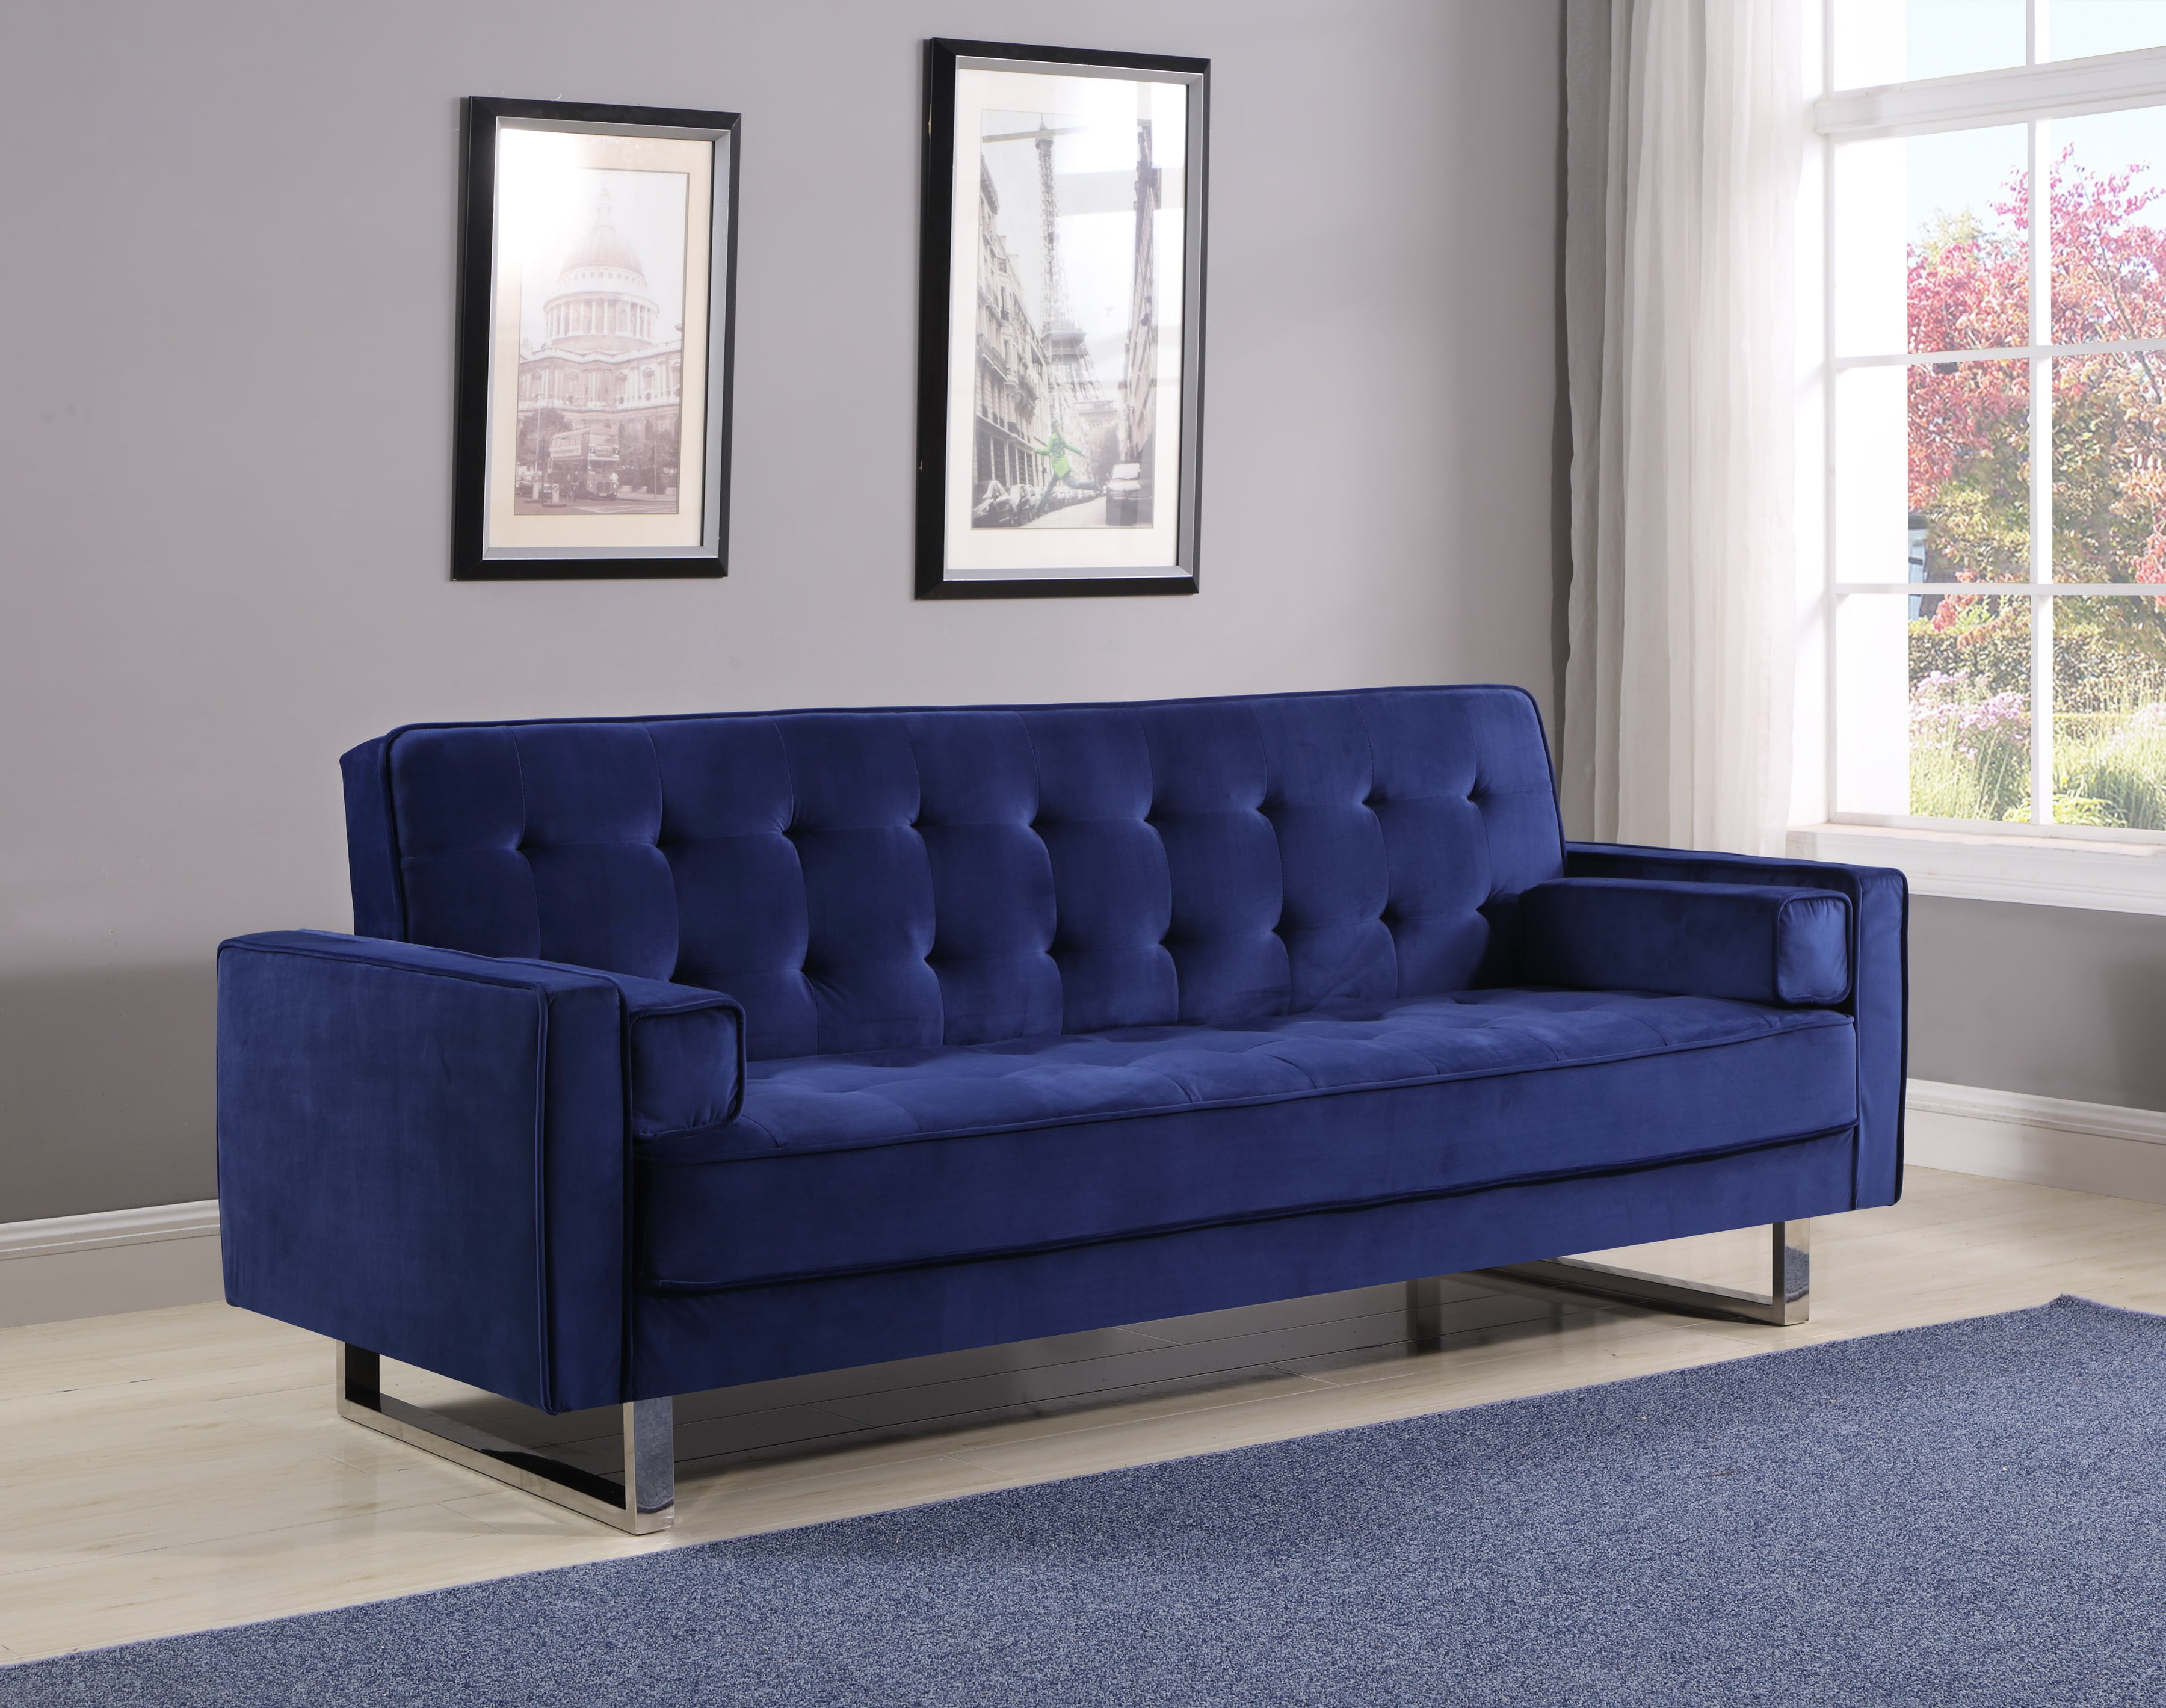 high quality sofa bed uk